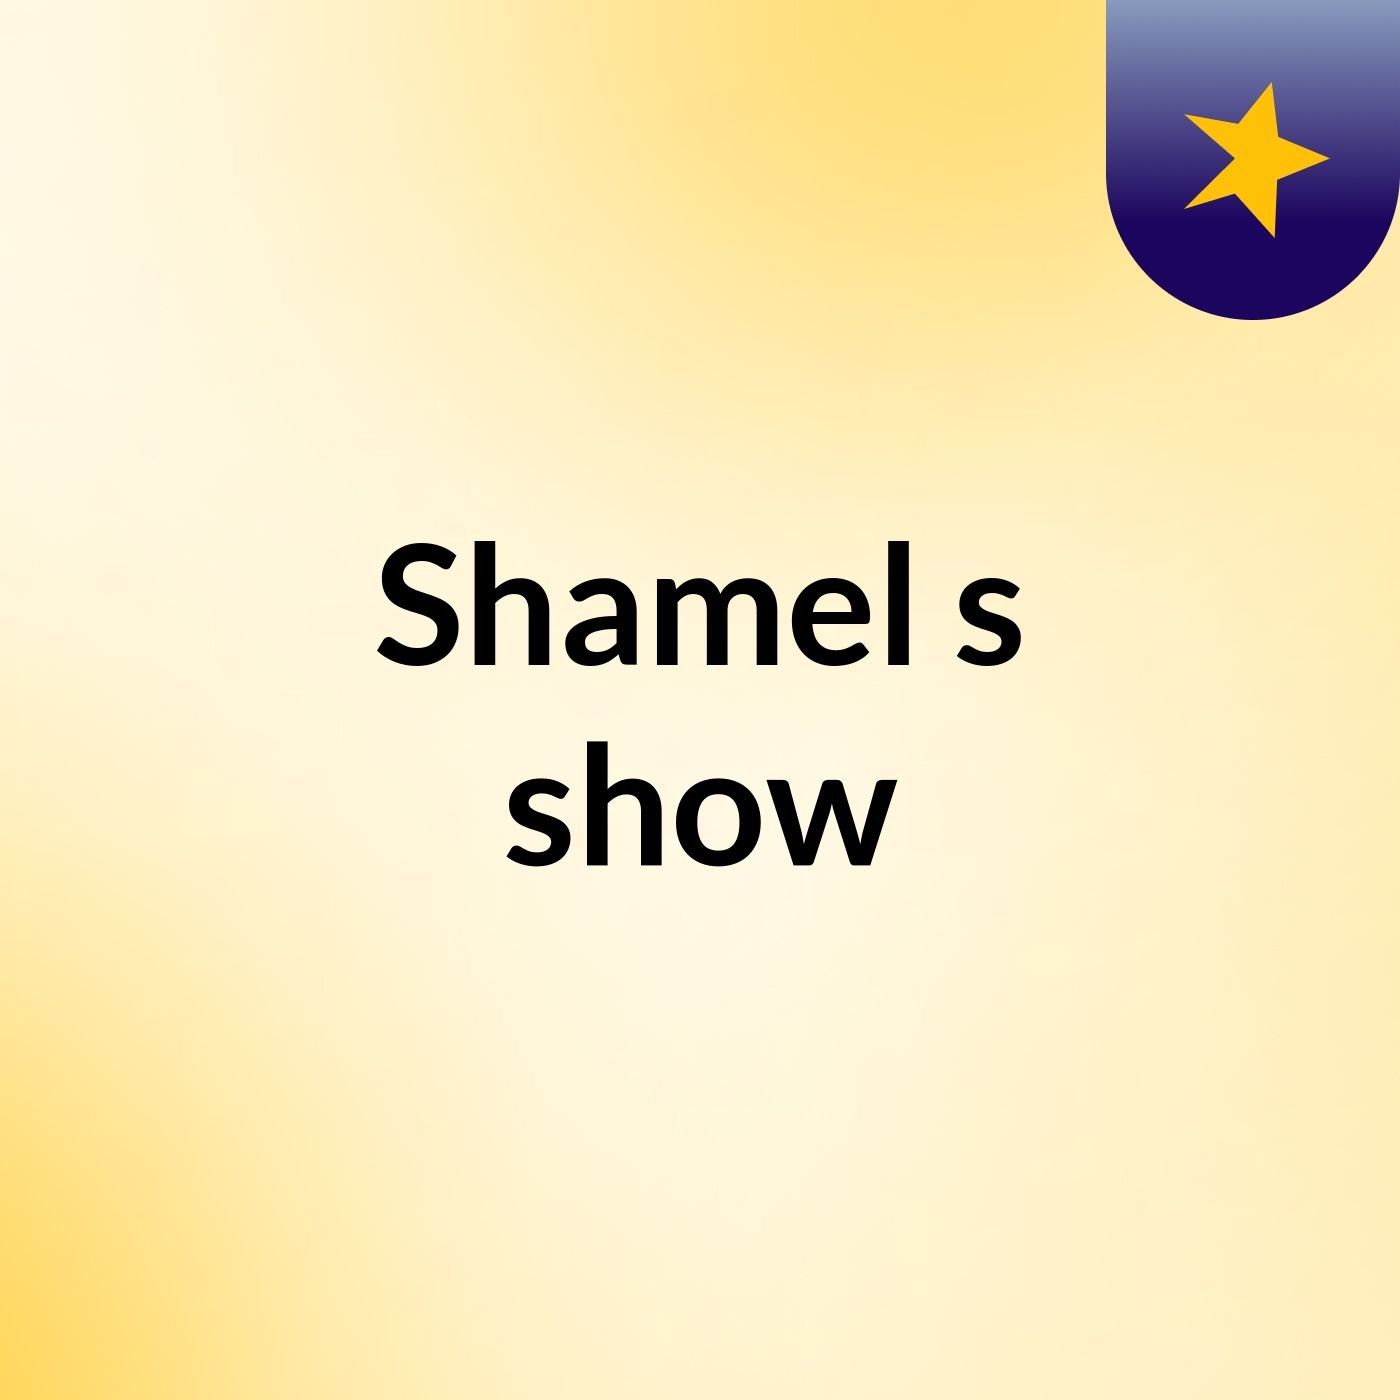 Shamel's show